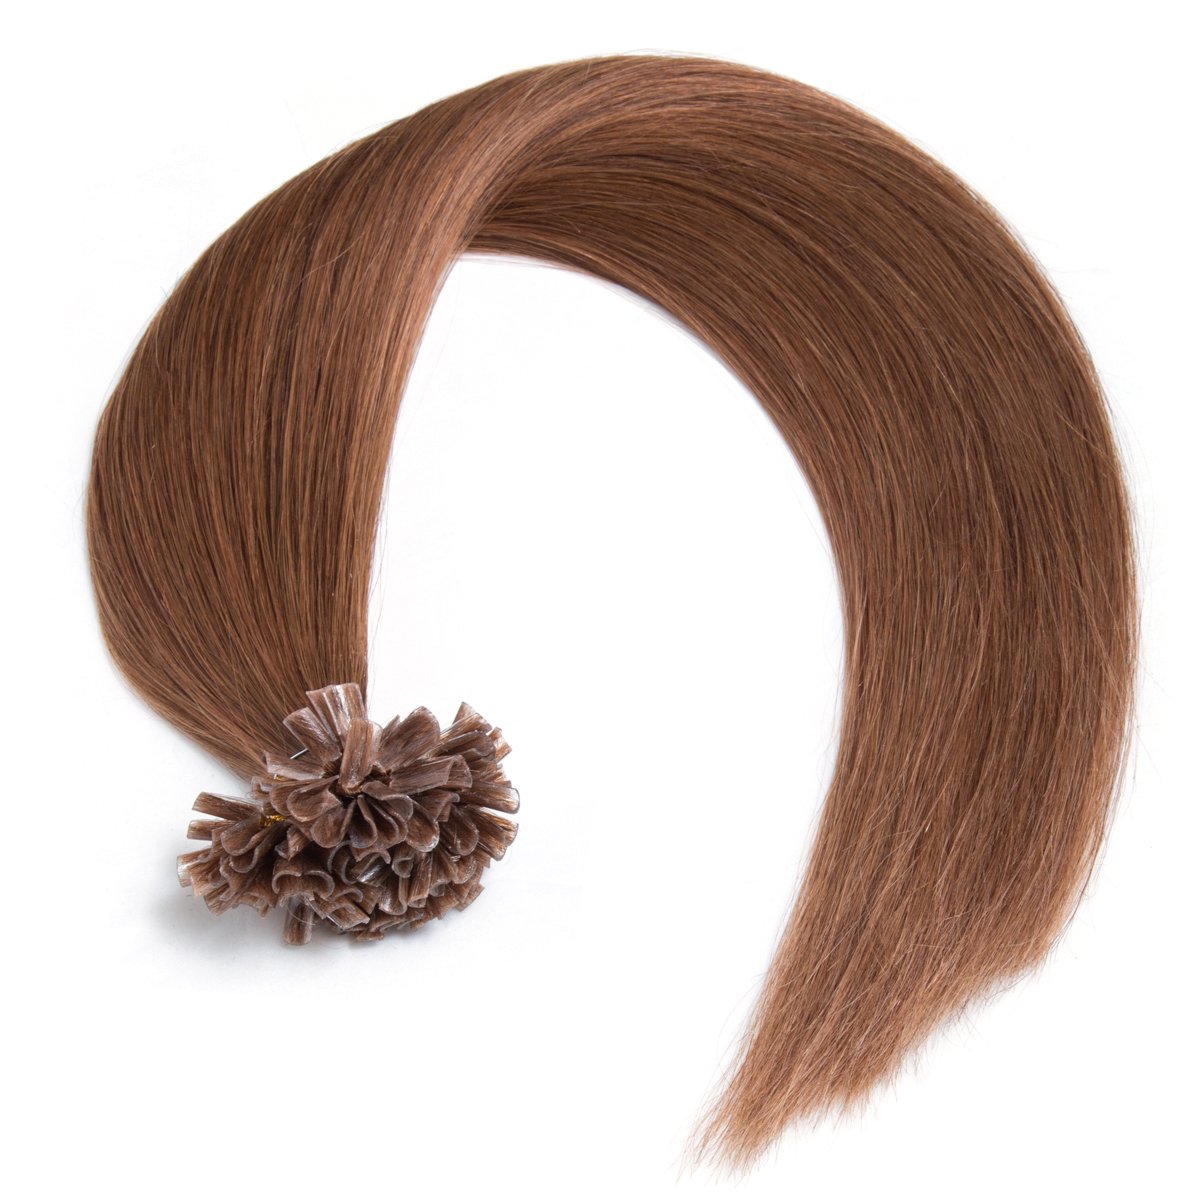 Goldbraune Keratin Bonding Extensions aus 100% Remy Echthaar/Human Hair - 50 x 0,5g 50cm Glatte Strähnen - U-Tip als Haarverlängerung und Haarverdichtung - Farbe: #8 Goldbraun